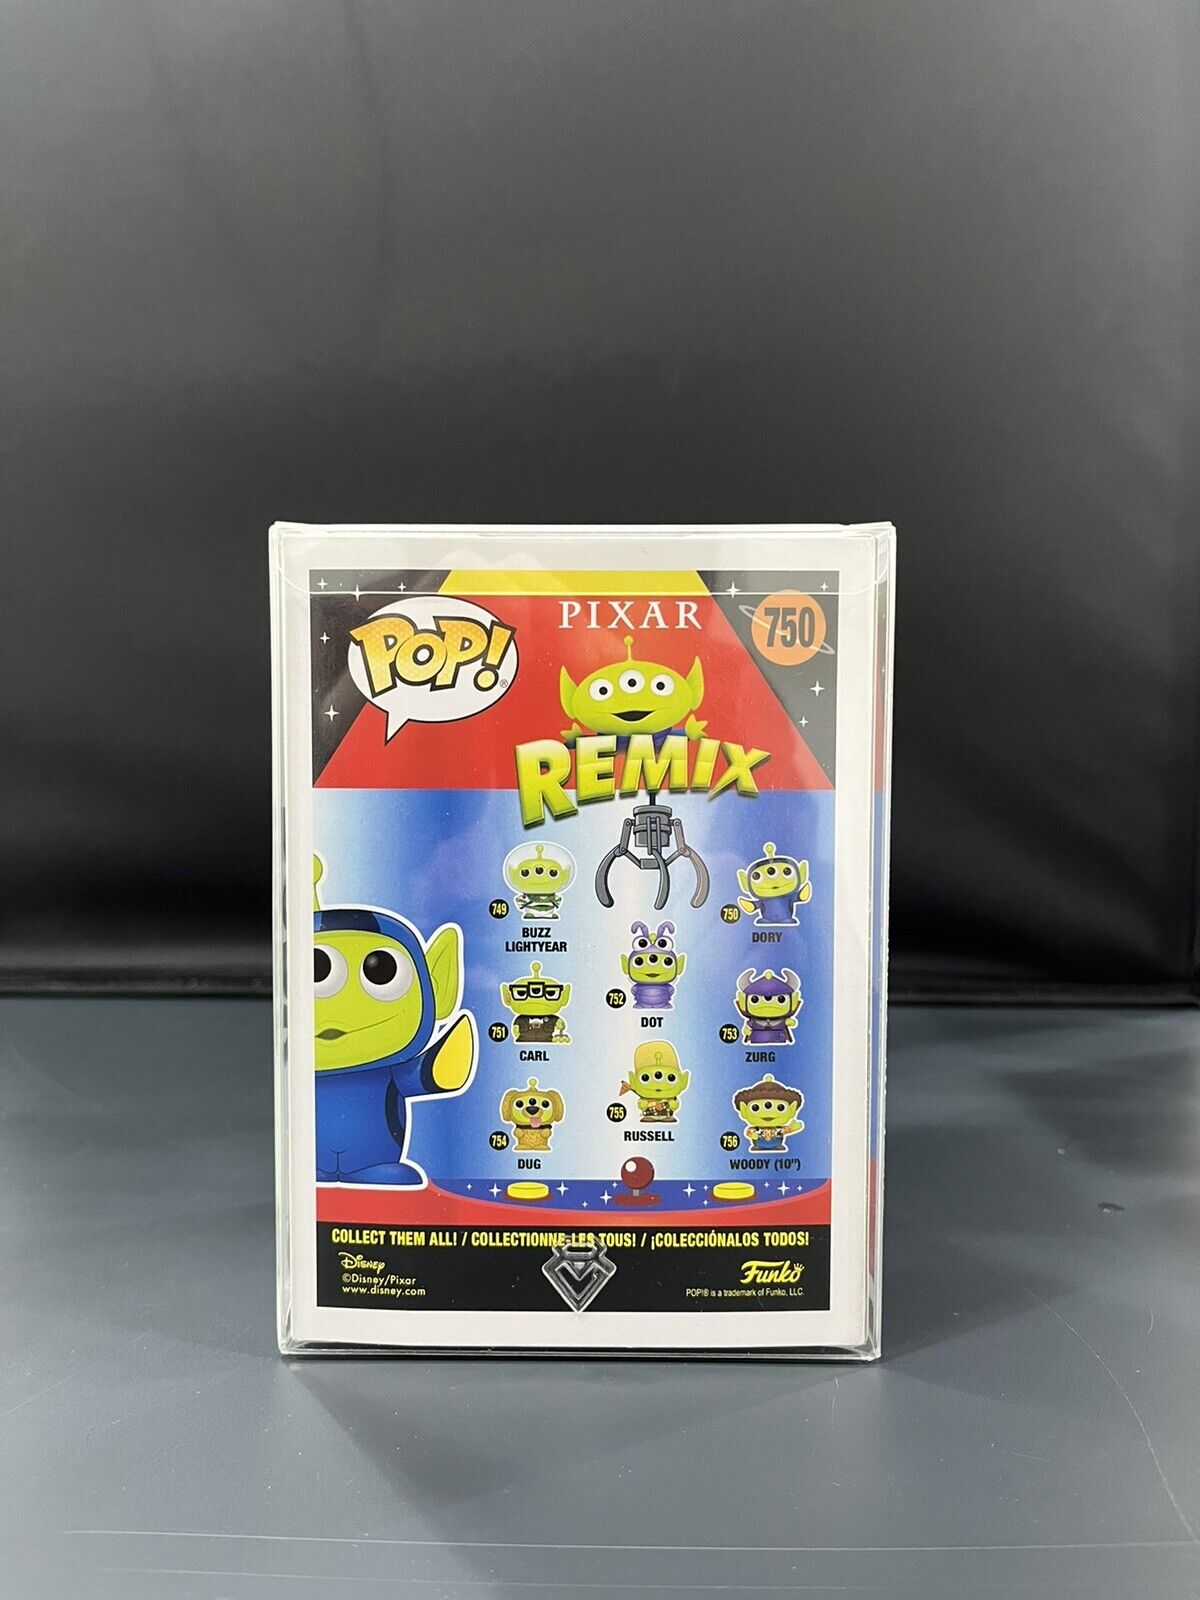 Funko Pop! Disney Pixar Alien Remix Dory #750 Vinyl Figure Toy Story